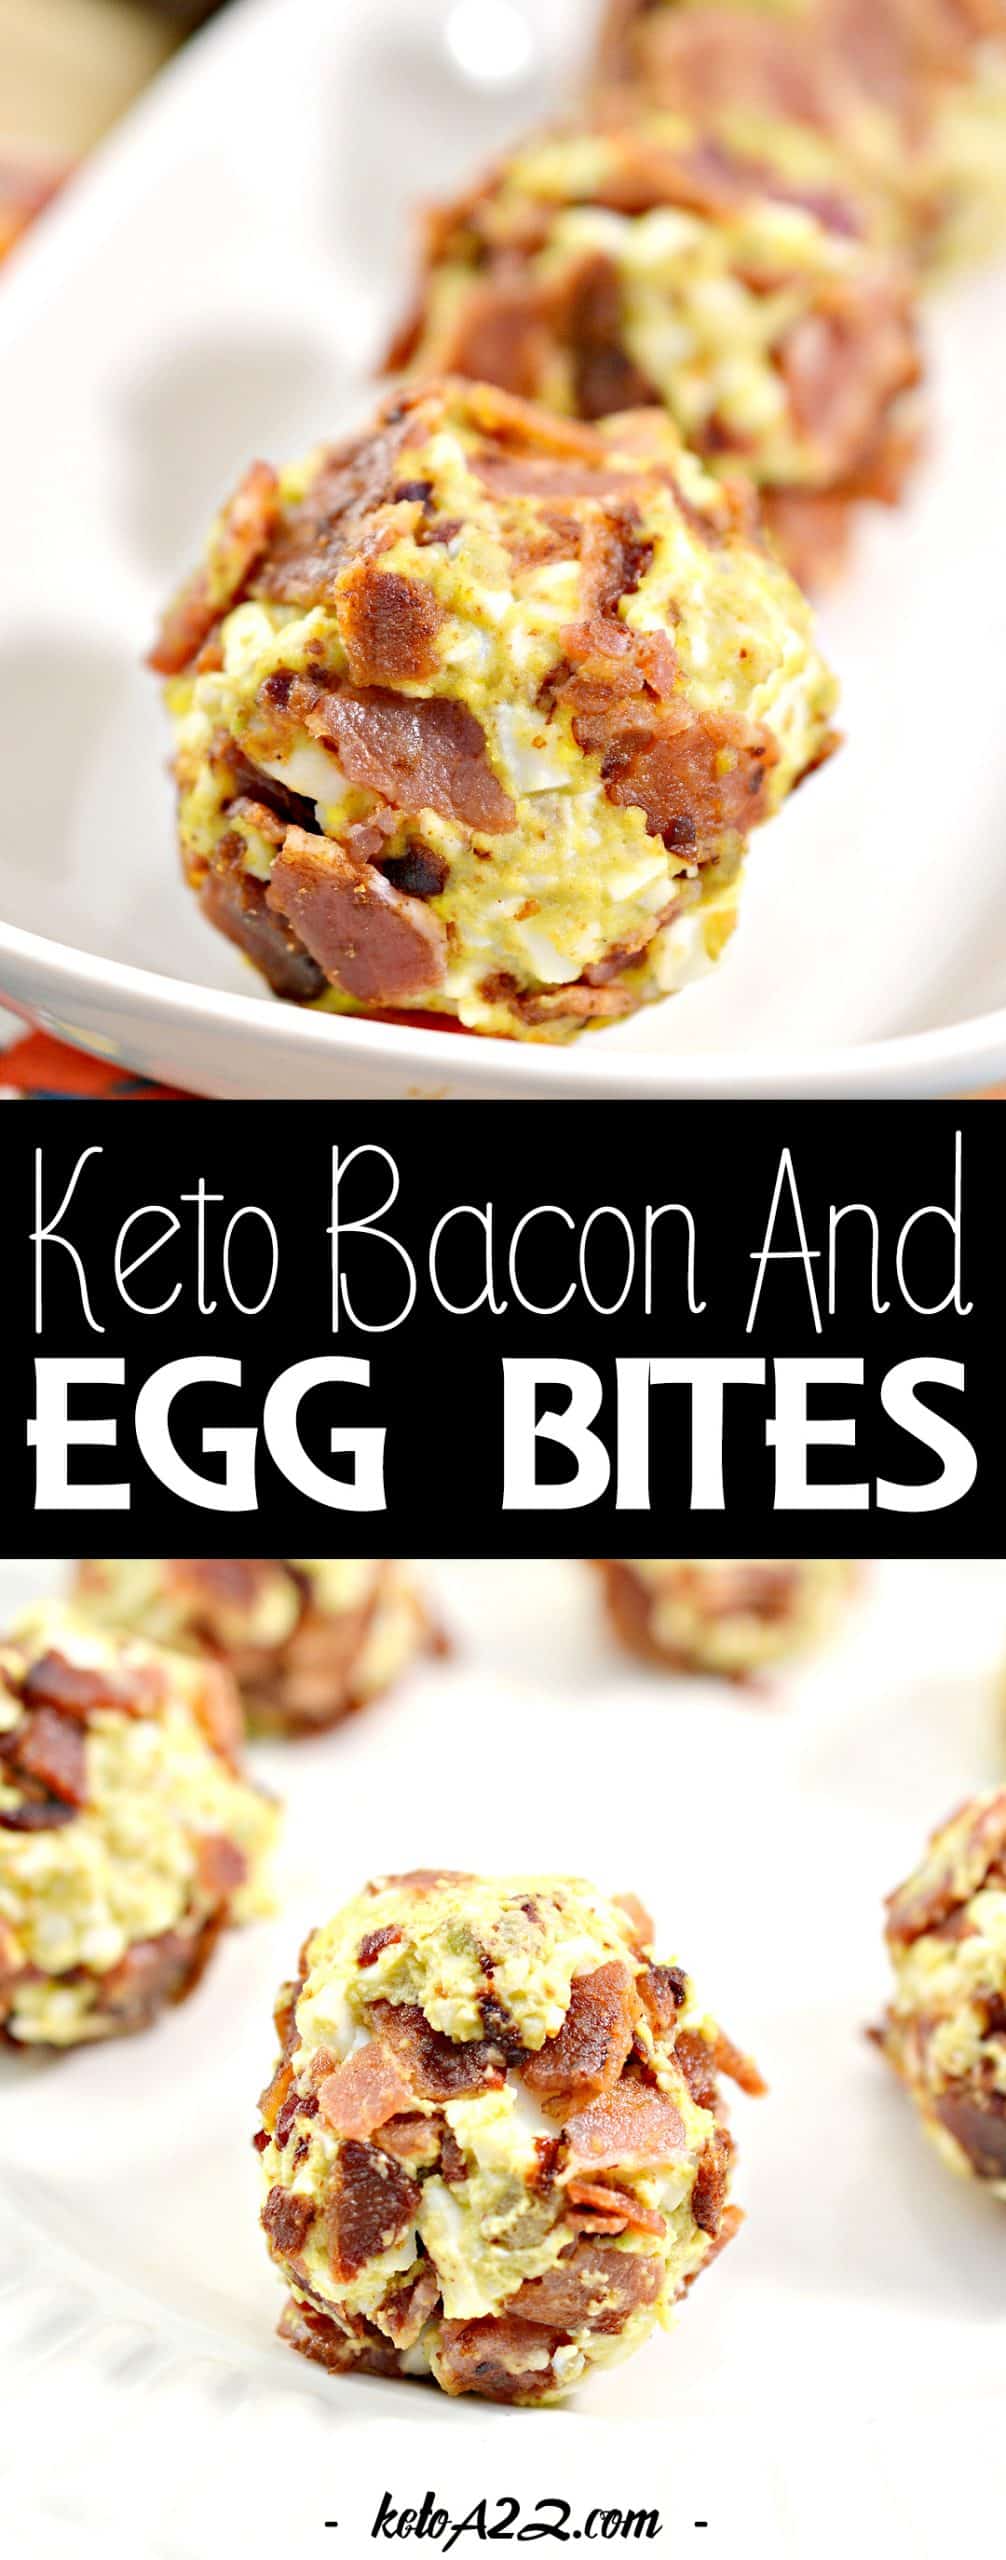 keto bacon and egg bites